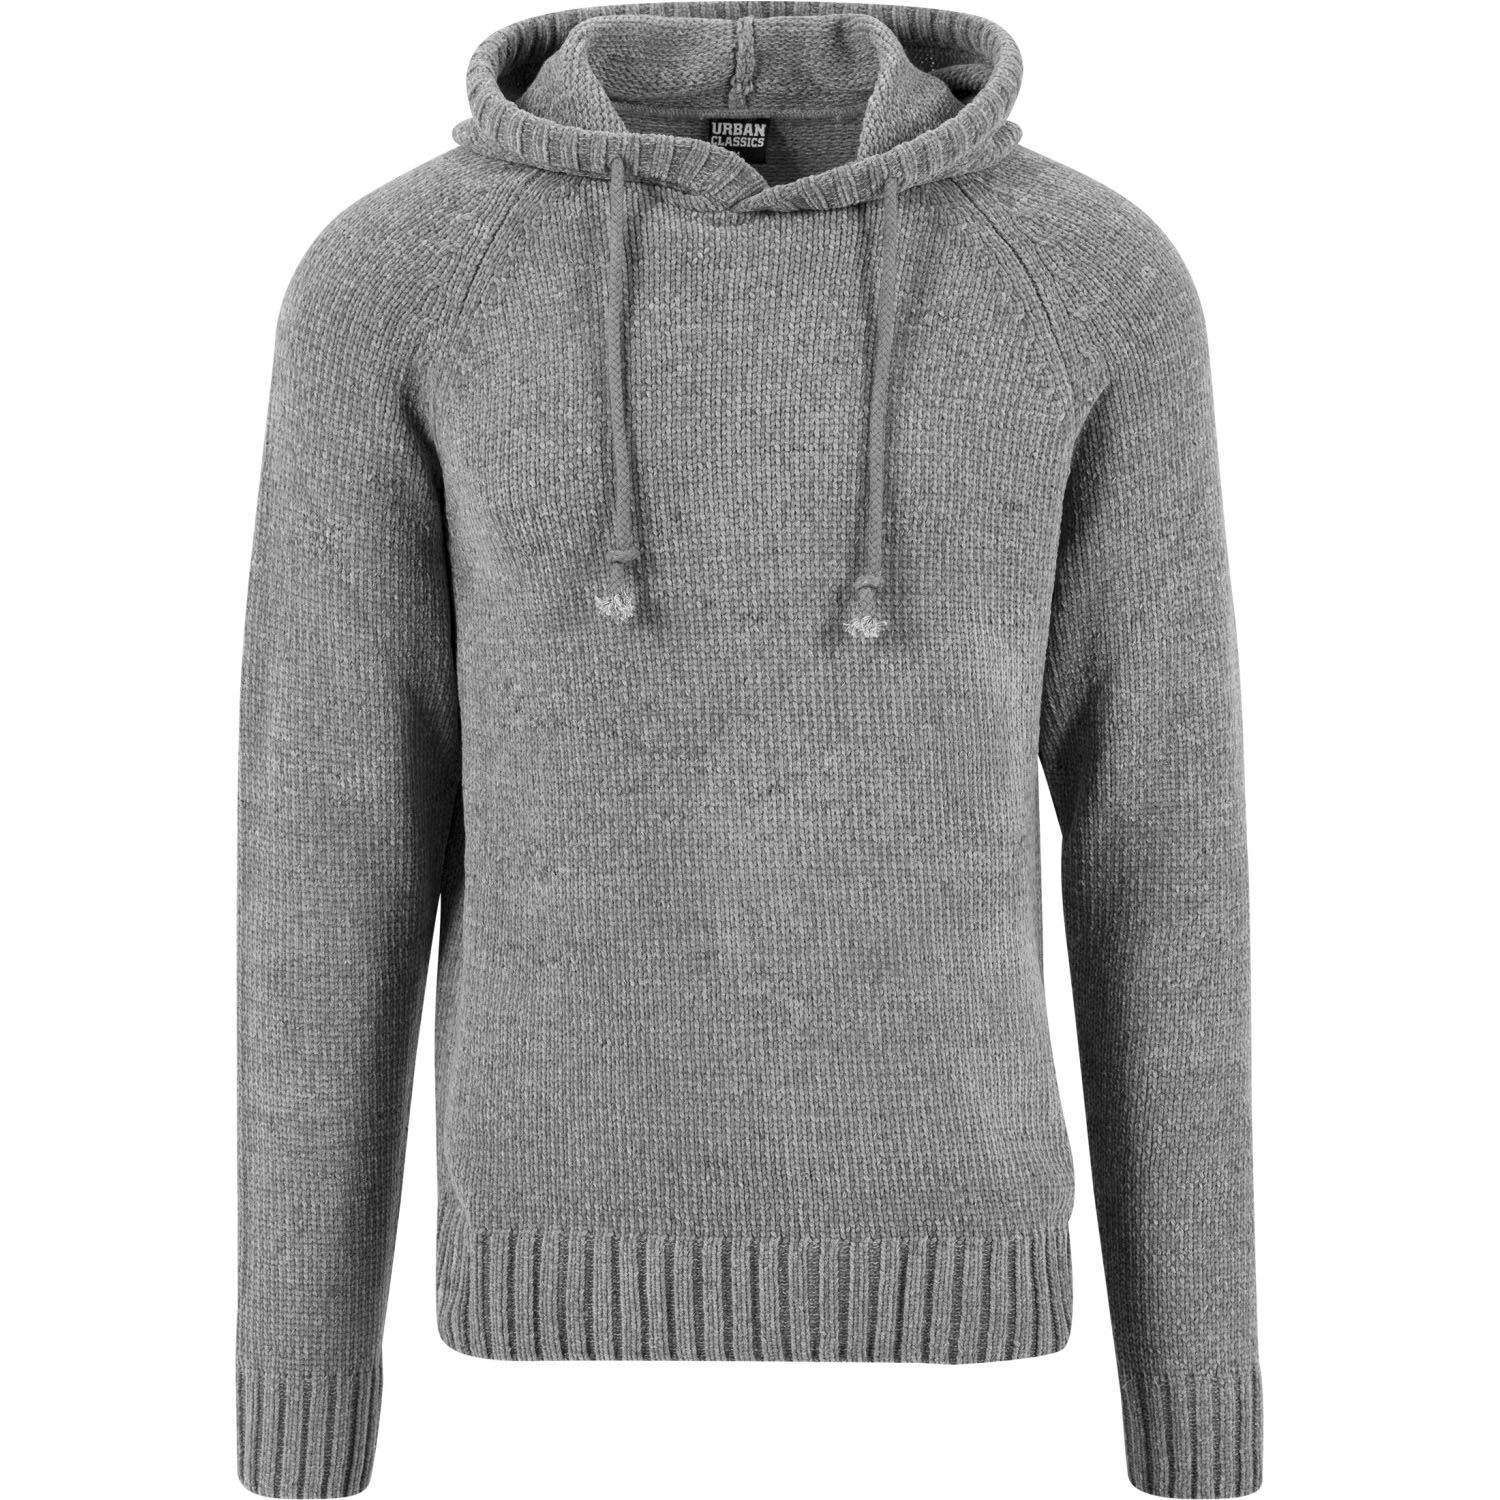 Buy Urban Classics - CHENILLE Hooded Sweater grey